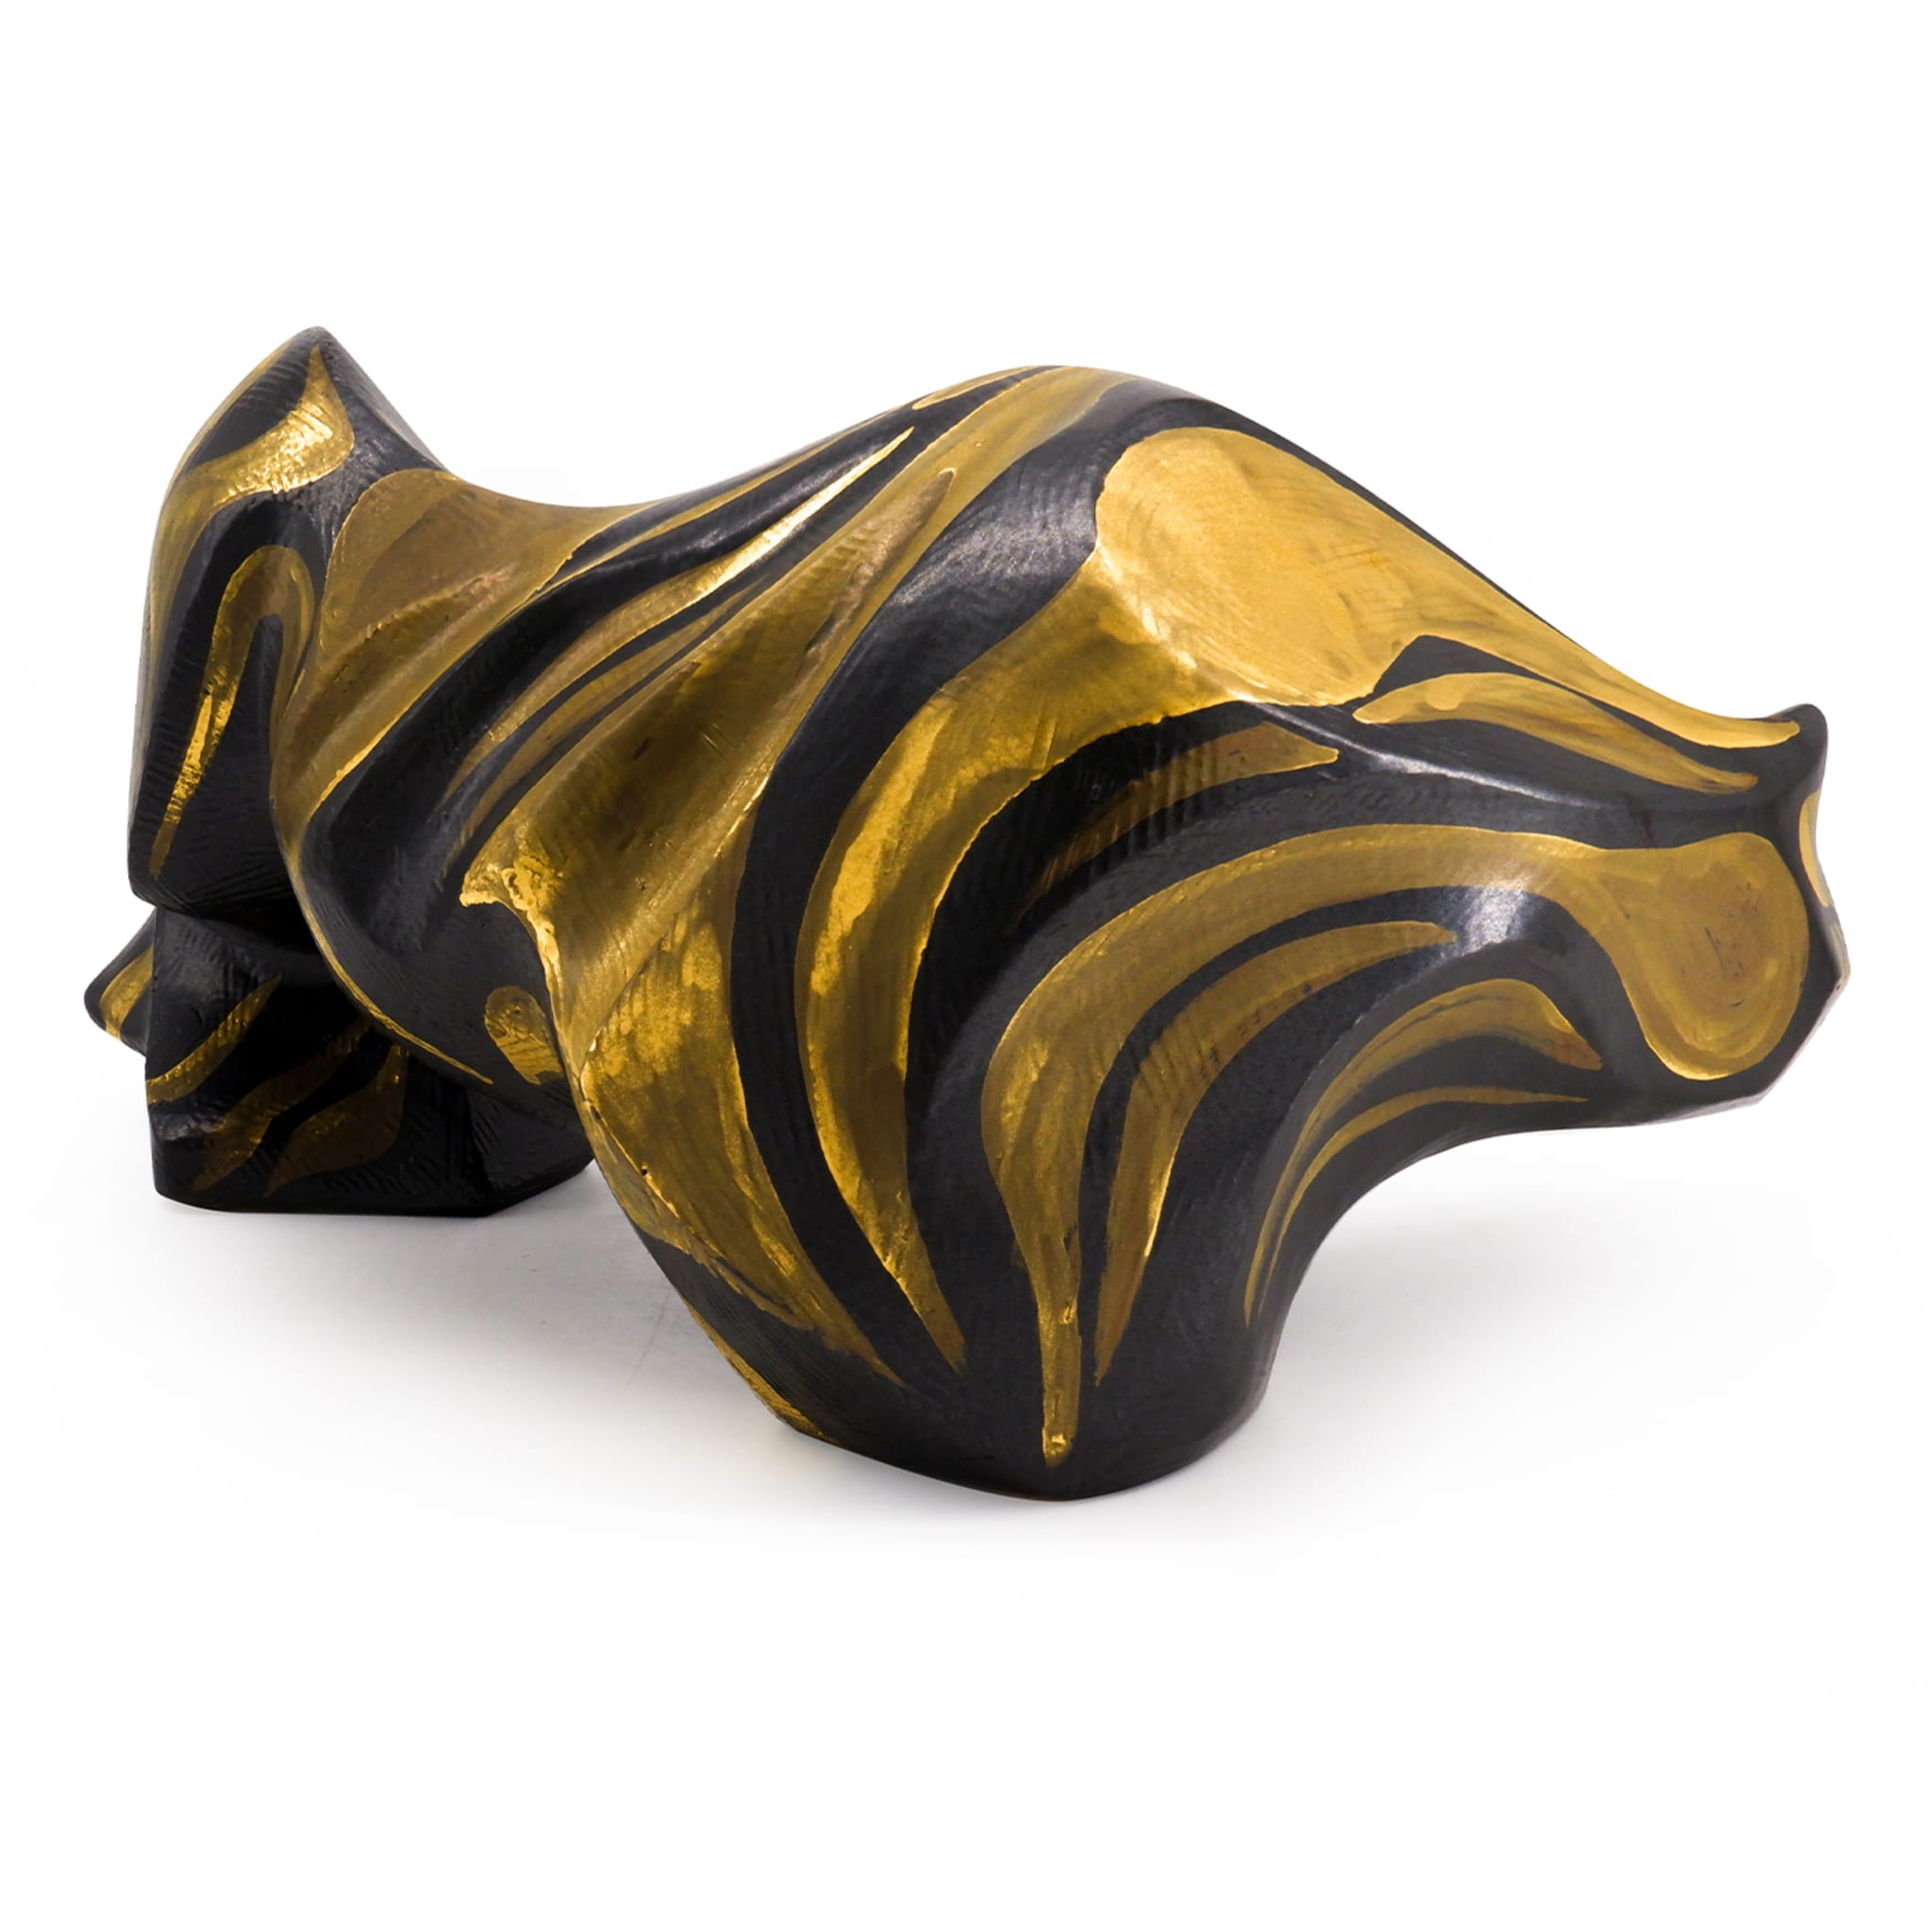 Tora black and gold sculpture - Alternative view 3